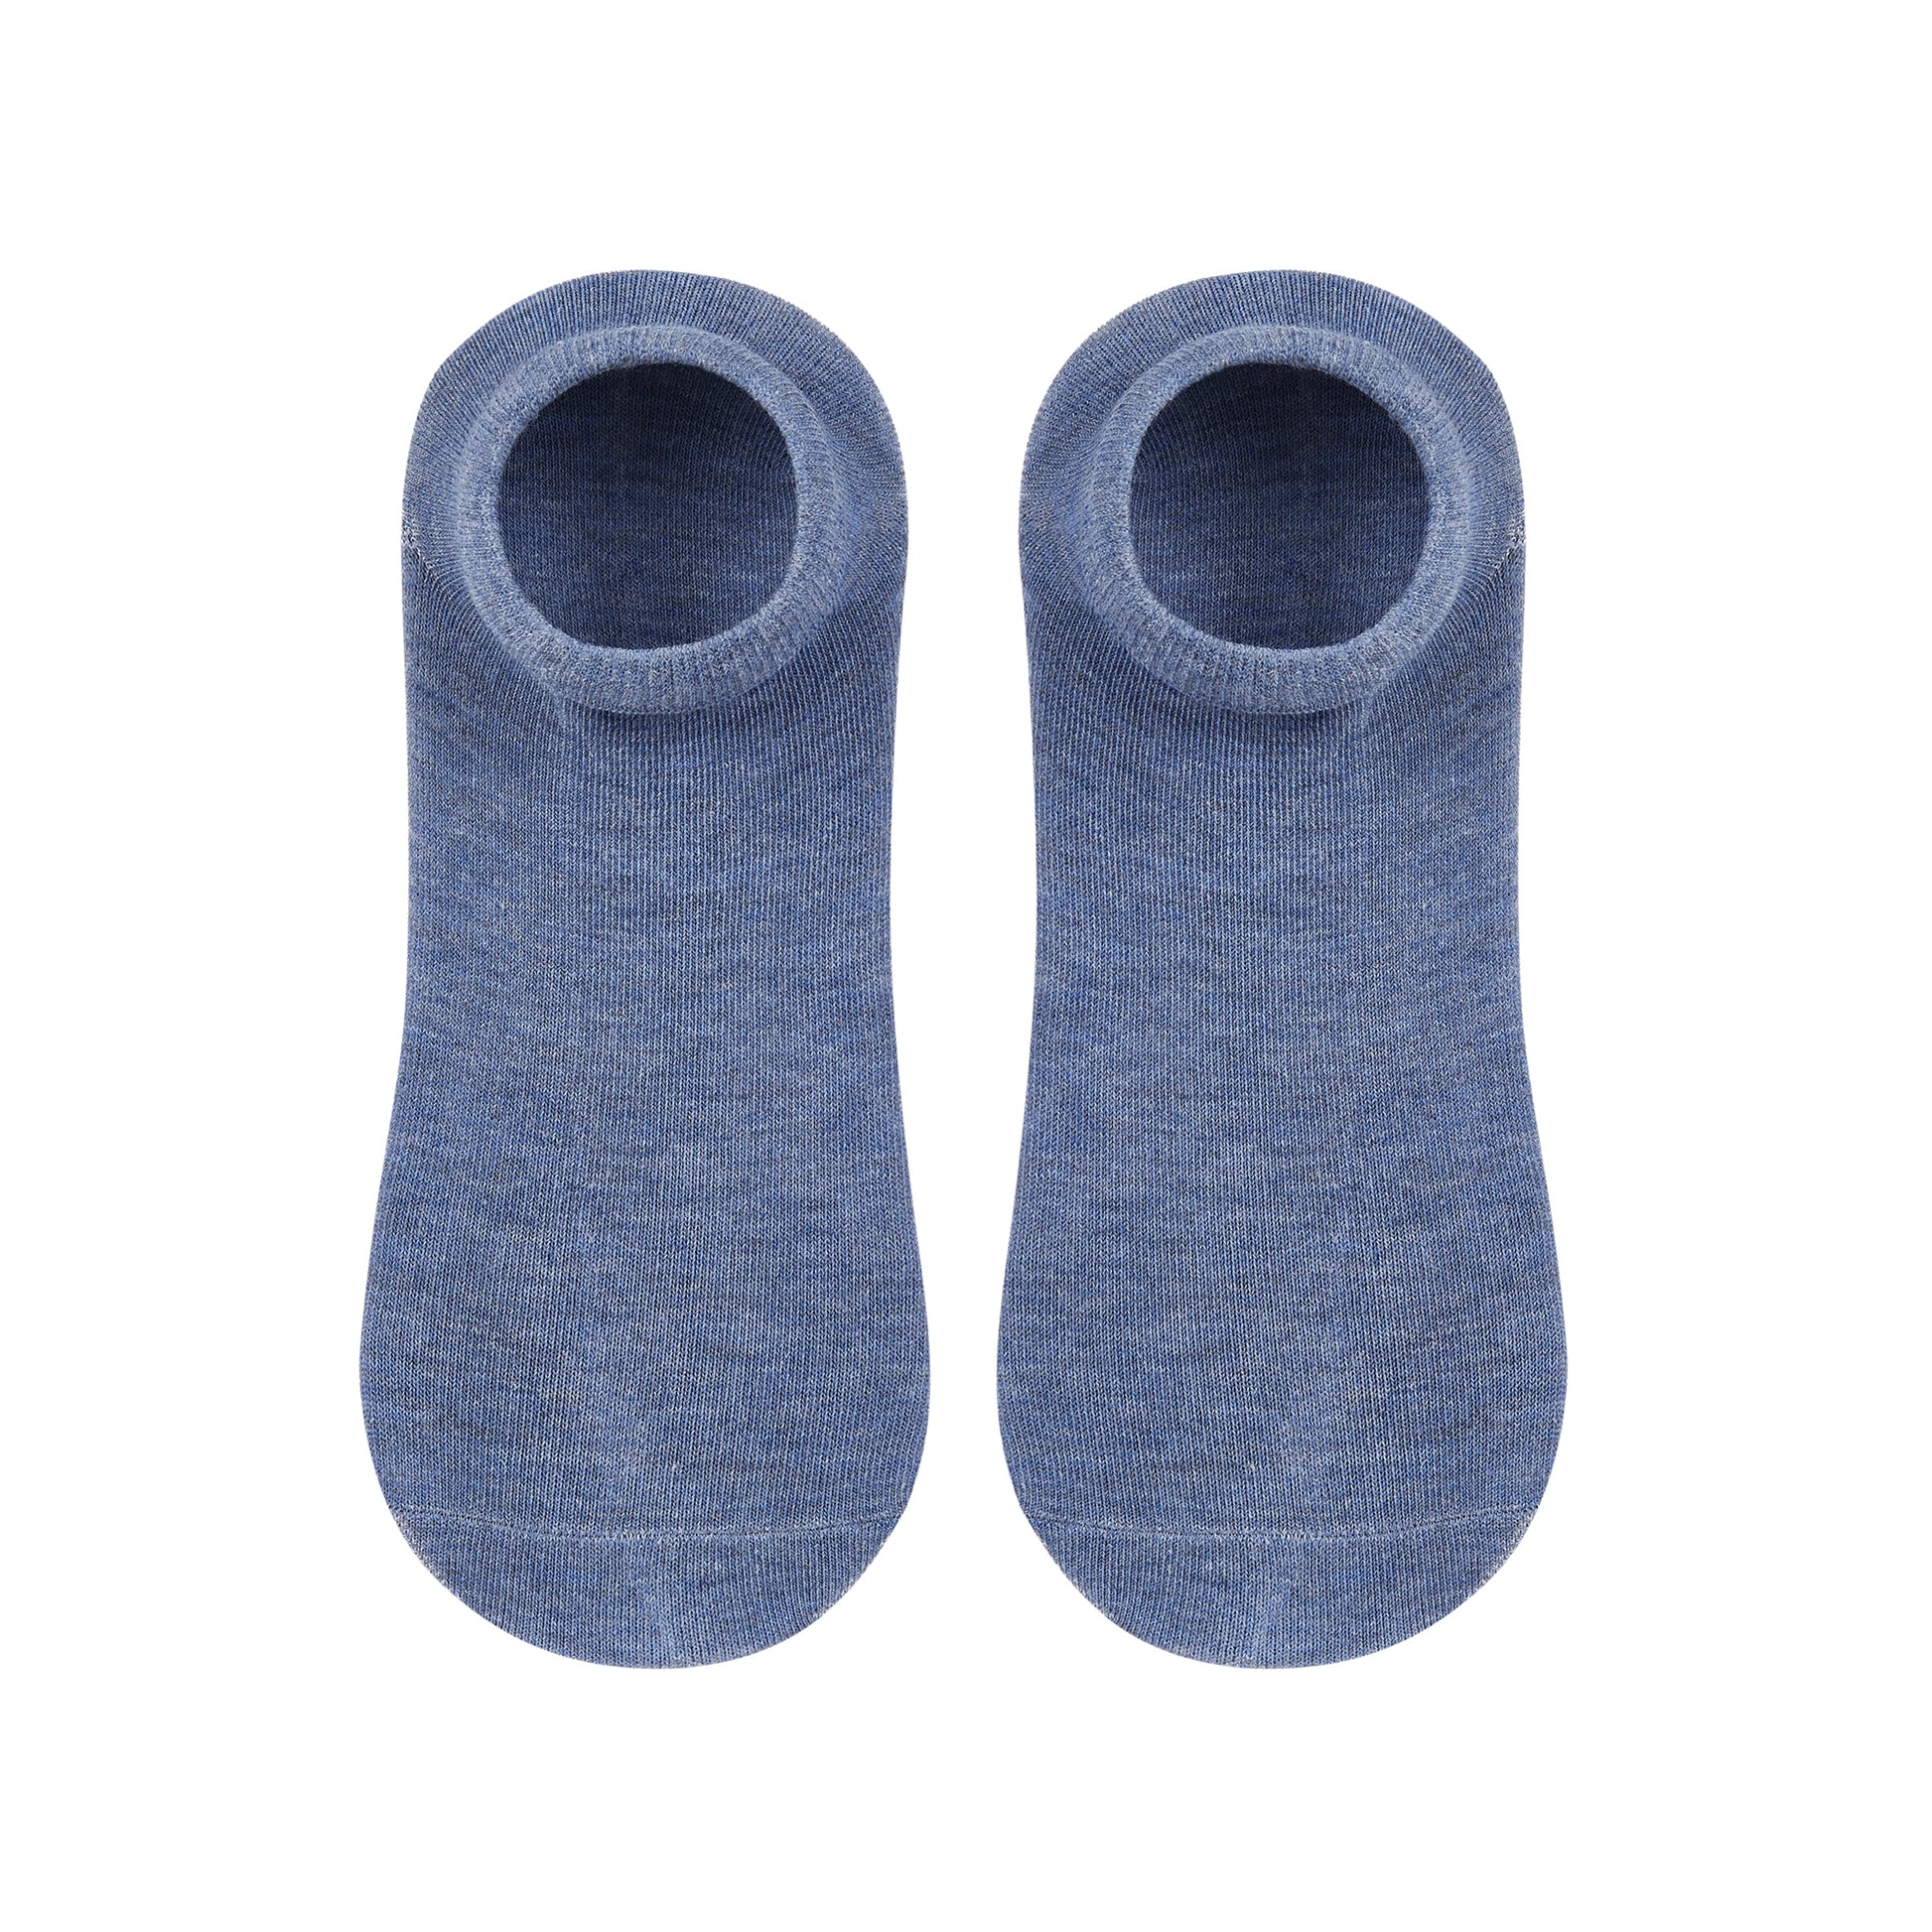 Plain Colored Ankle Socks - IDENTITY Apparel Shop